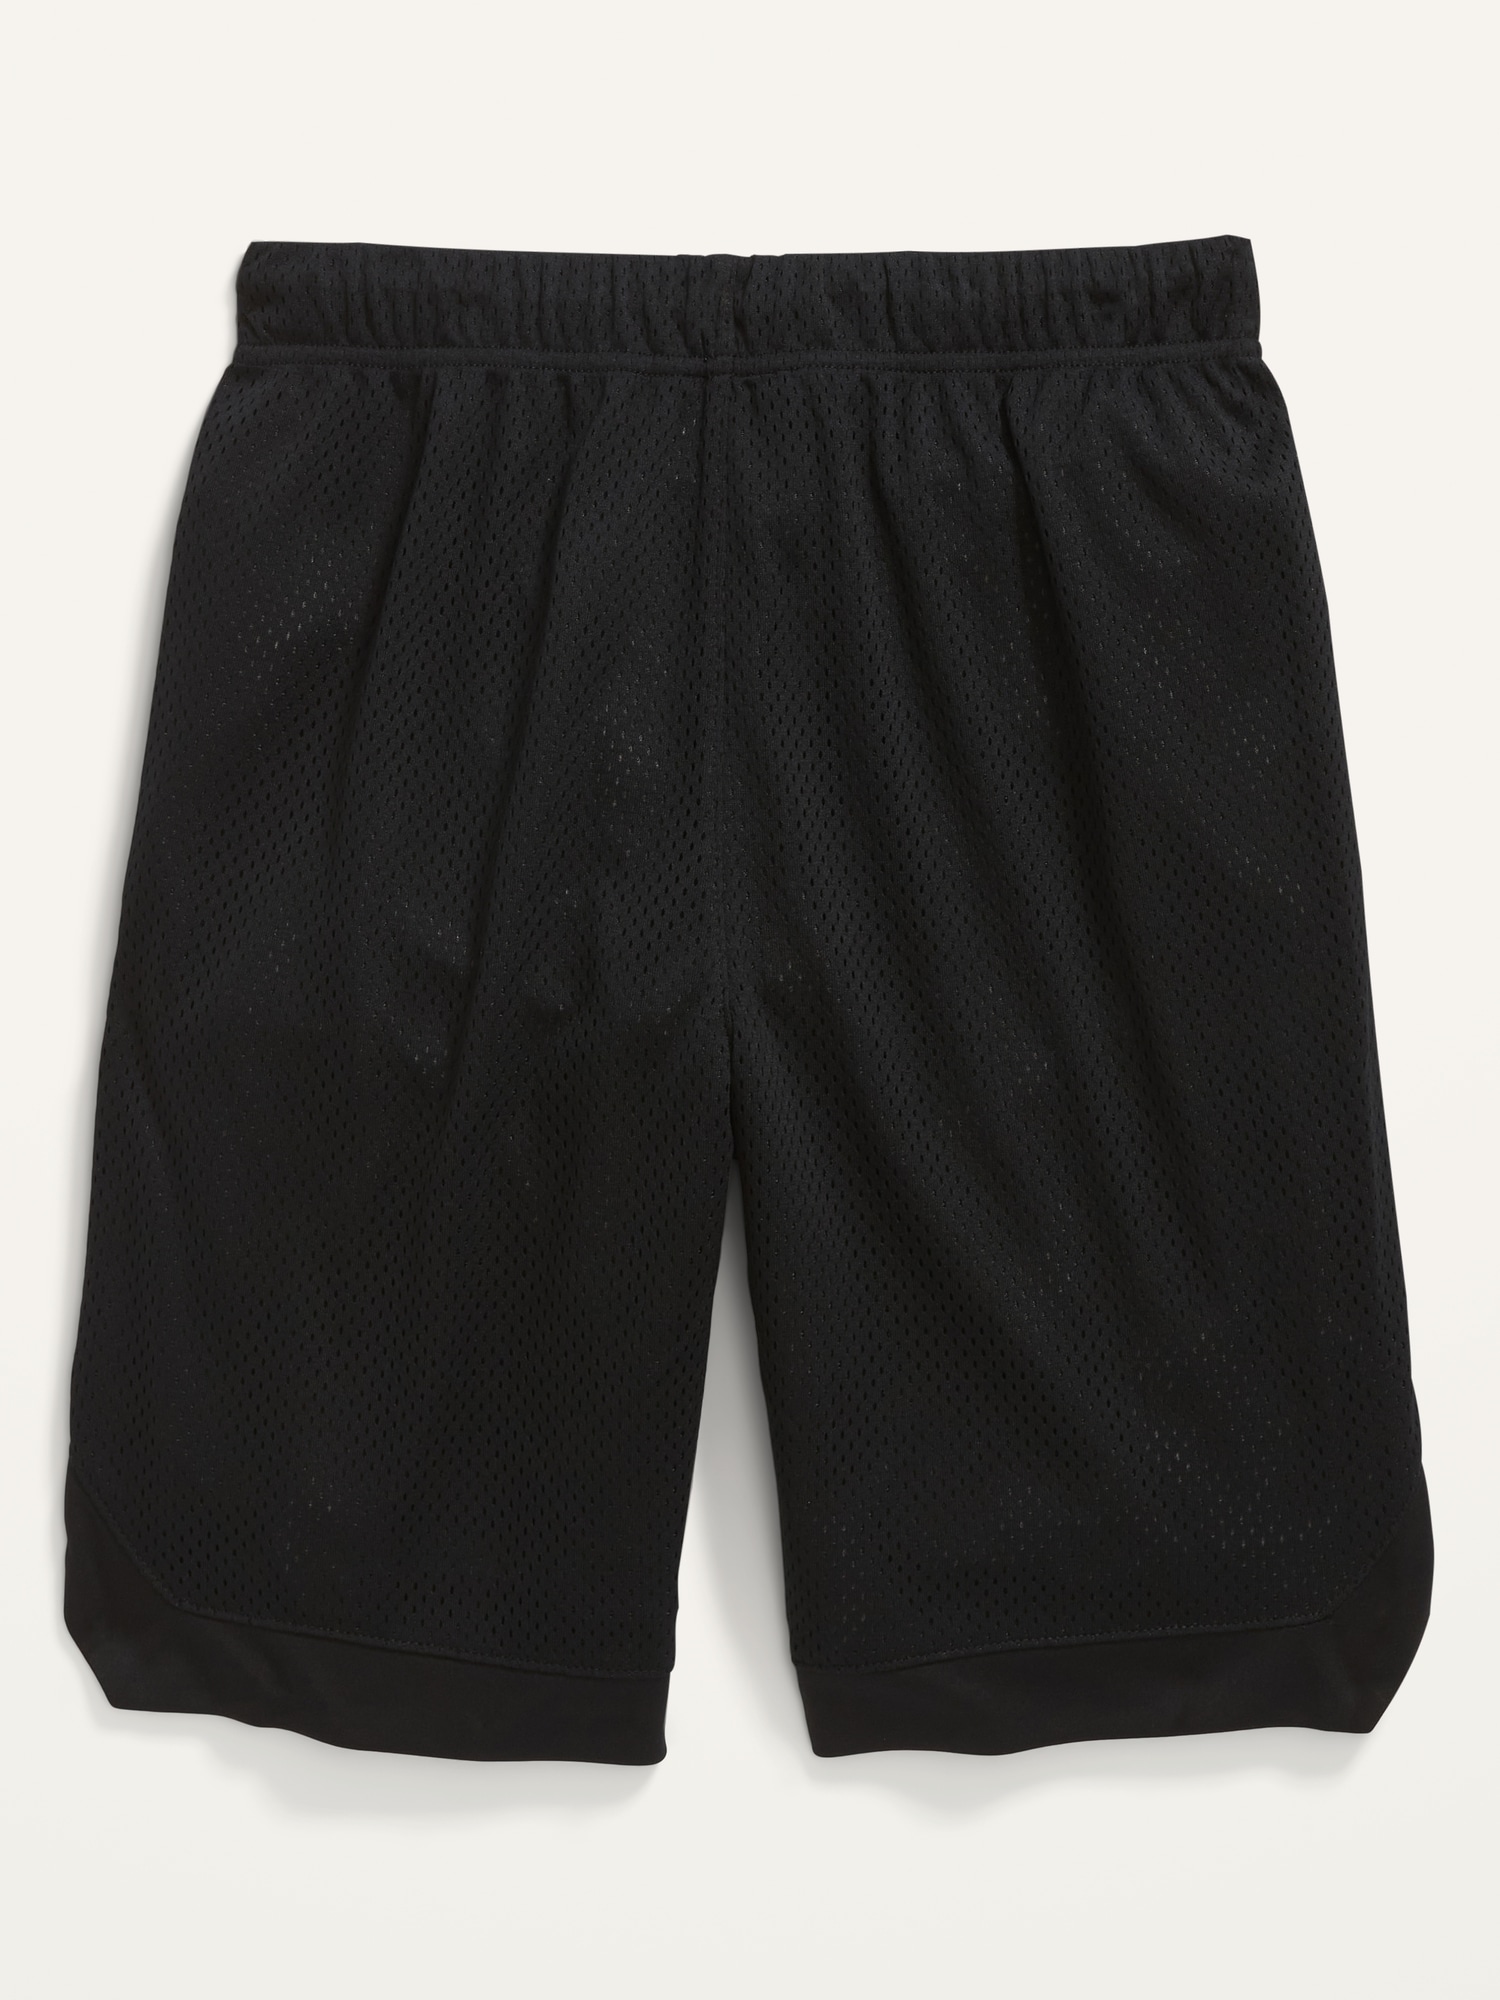 Mesh Basketball Shorts for Boys | Old Navy